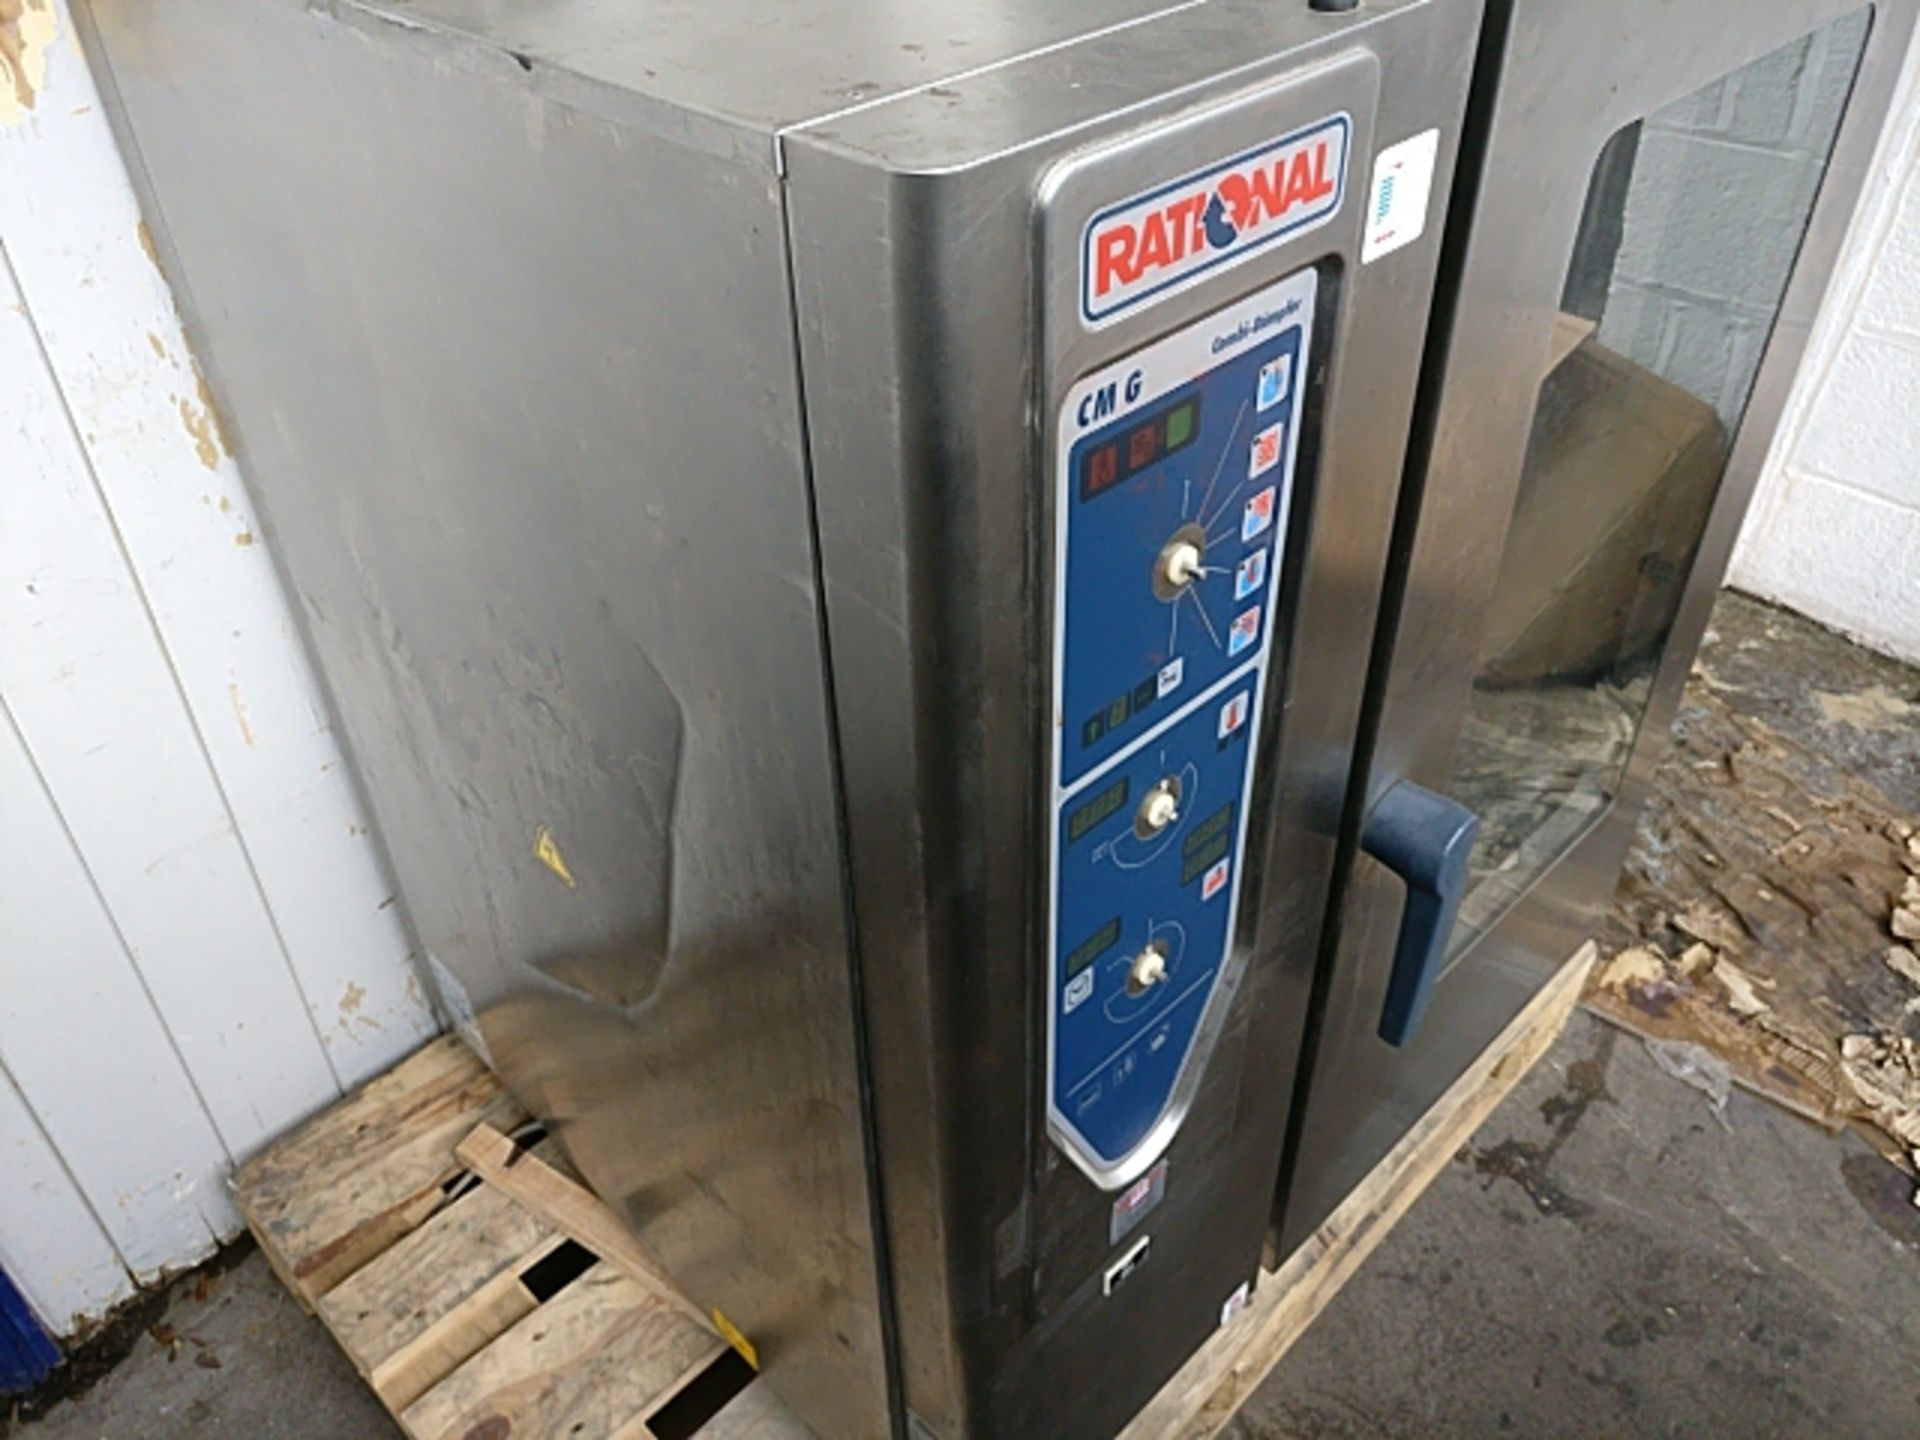 (511) 90cm gas Rational Clima Plus CM G Combi-Dampfer 10 shelf combination oven - Image 2 of 3